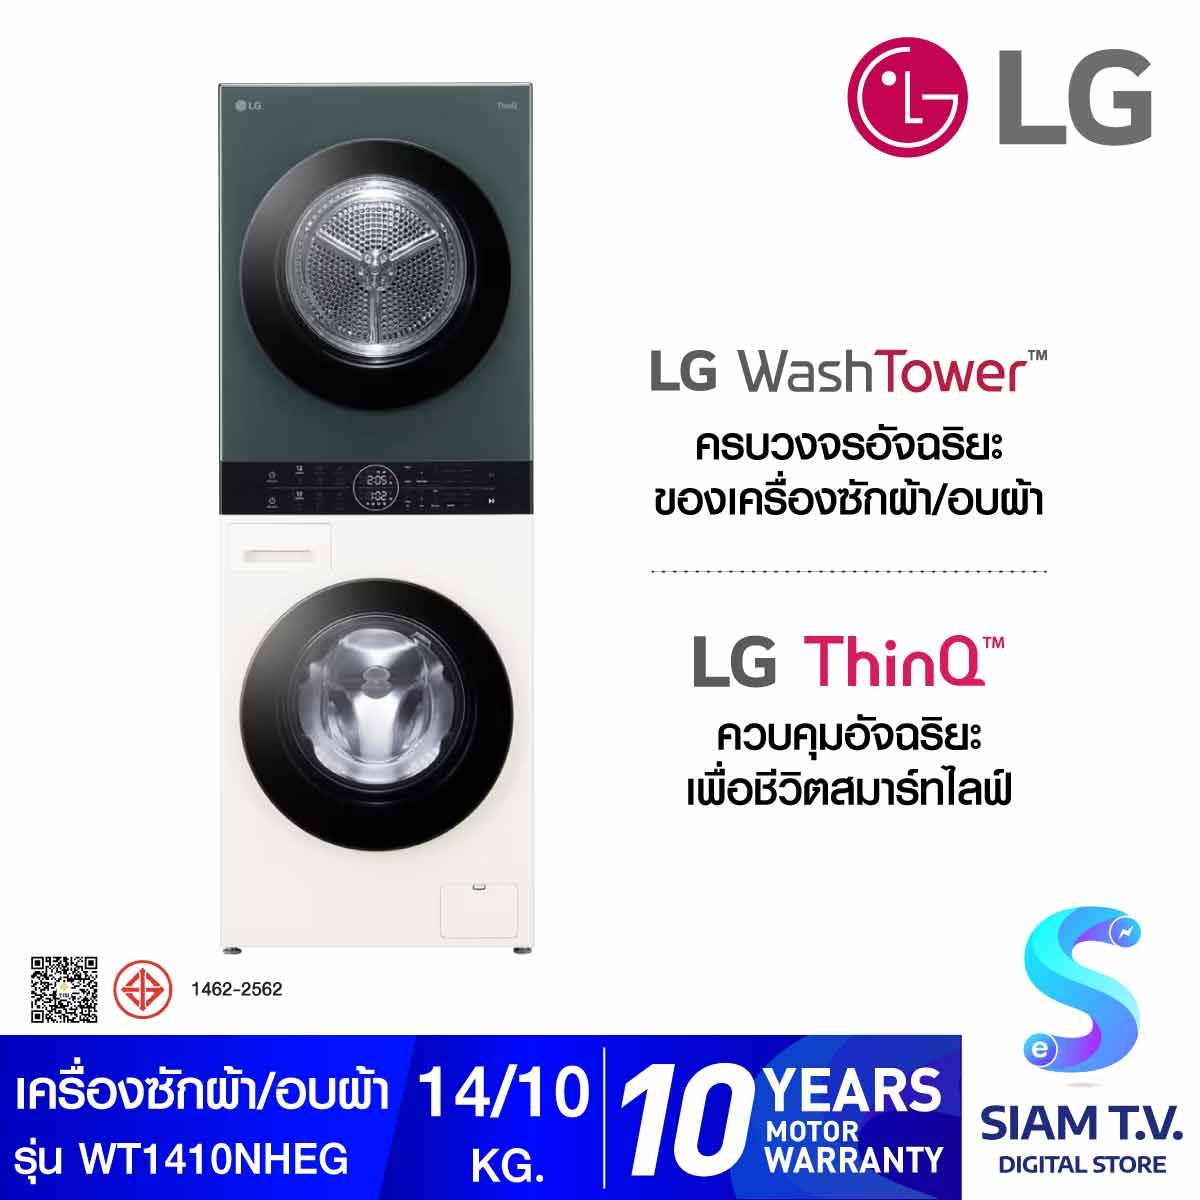 LG Wash Tower ซักผ้า 14 กก. และอบผ้า 10 กก. สีเขียว-เบจ  รุ่น WT1410NHEG